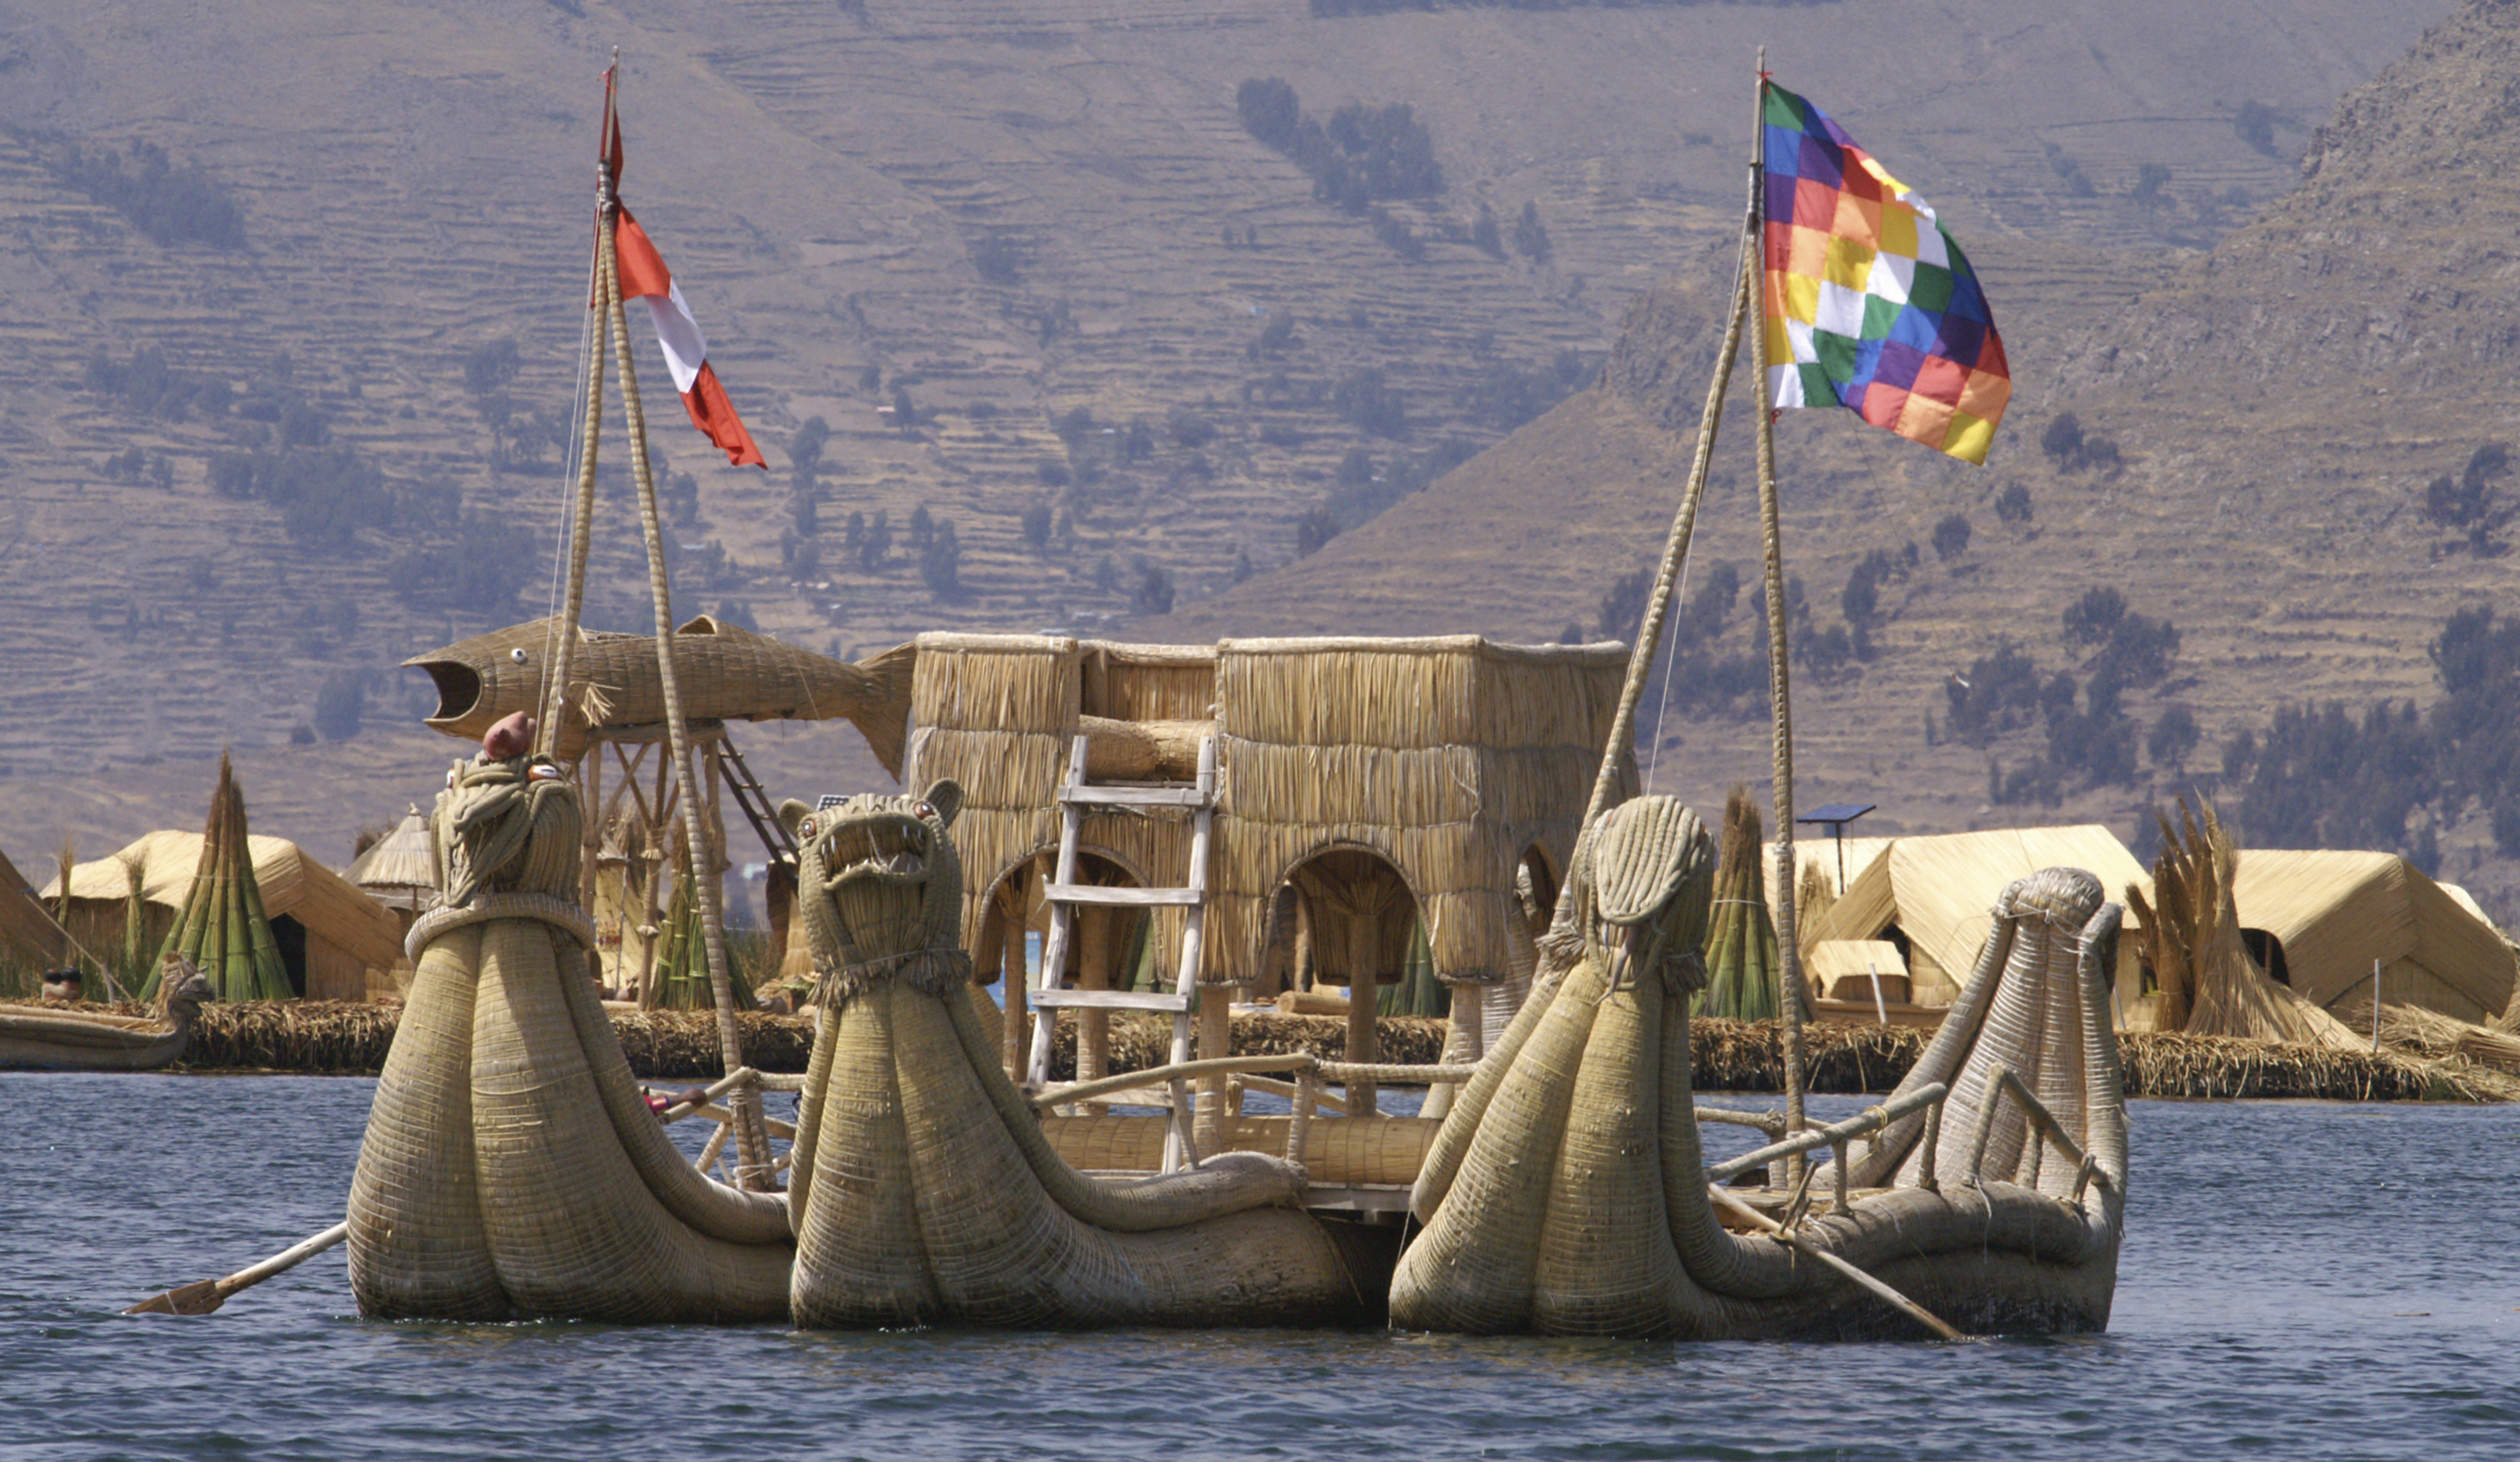 Reed boats, Lake Titicaca, Peru